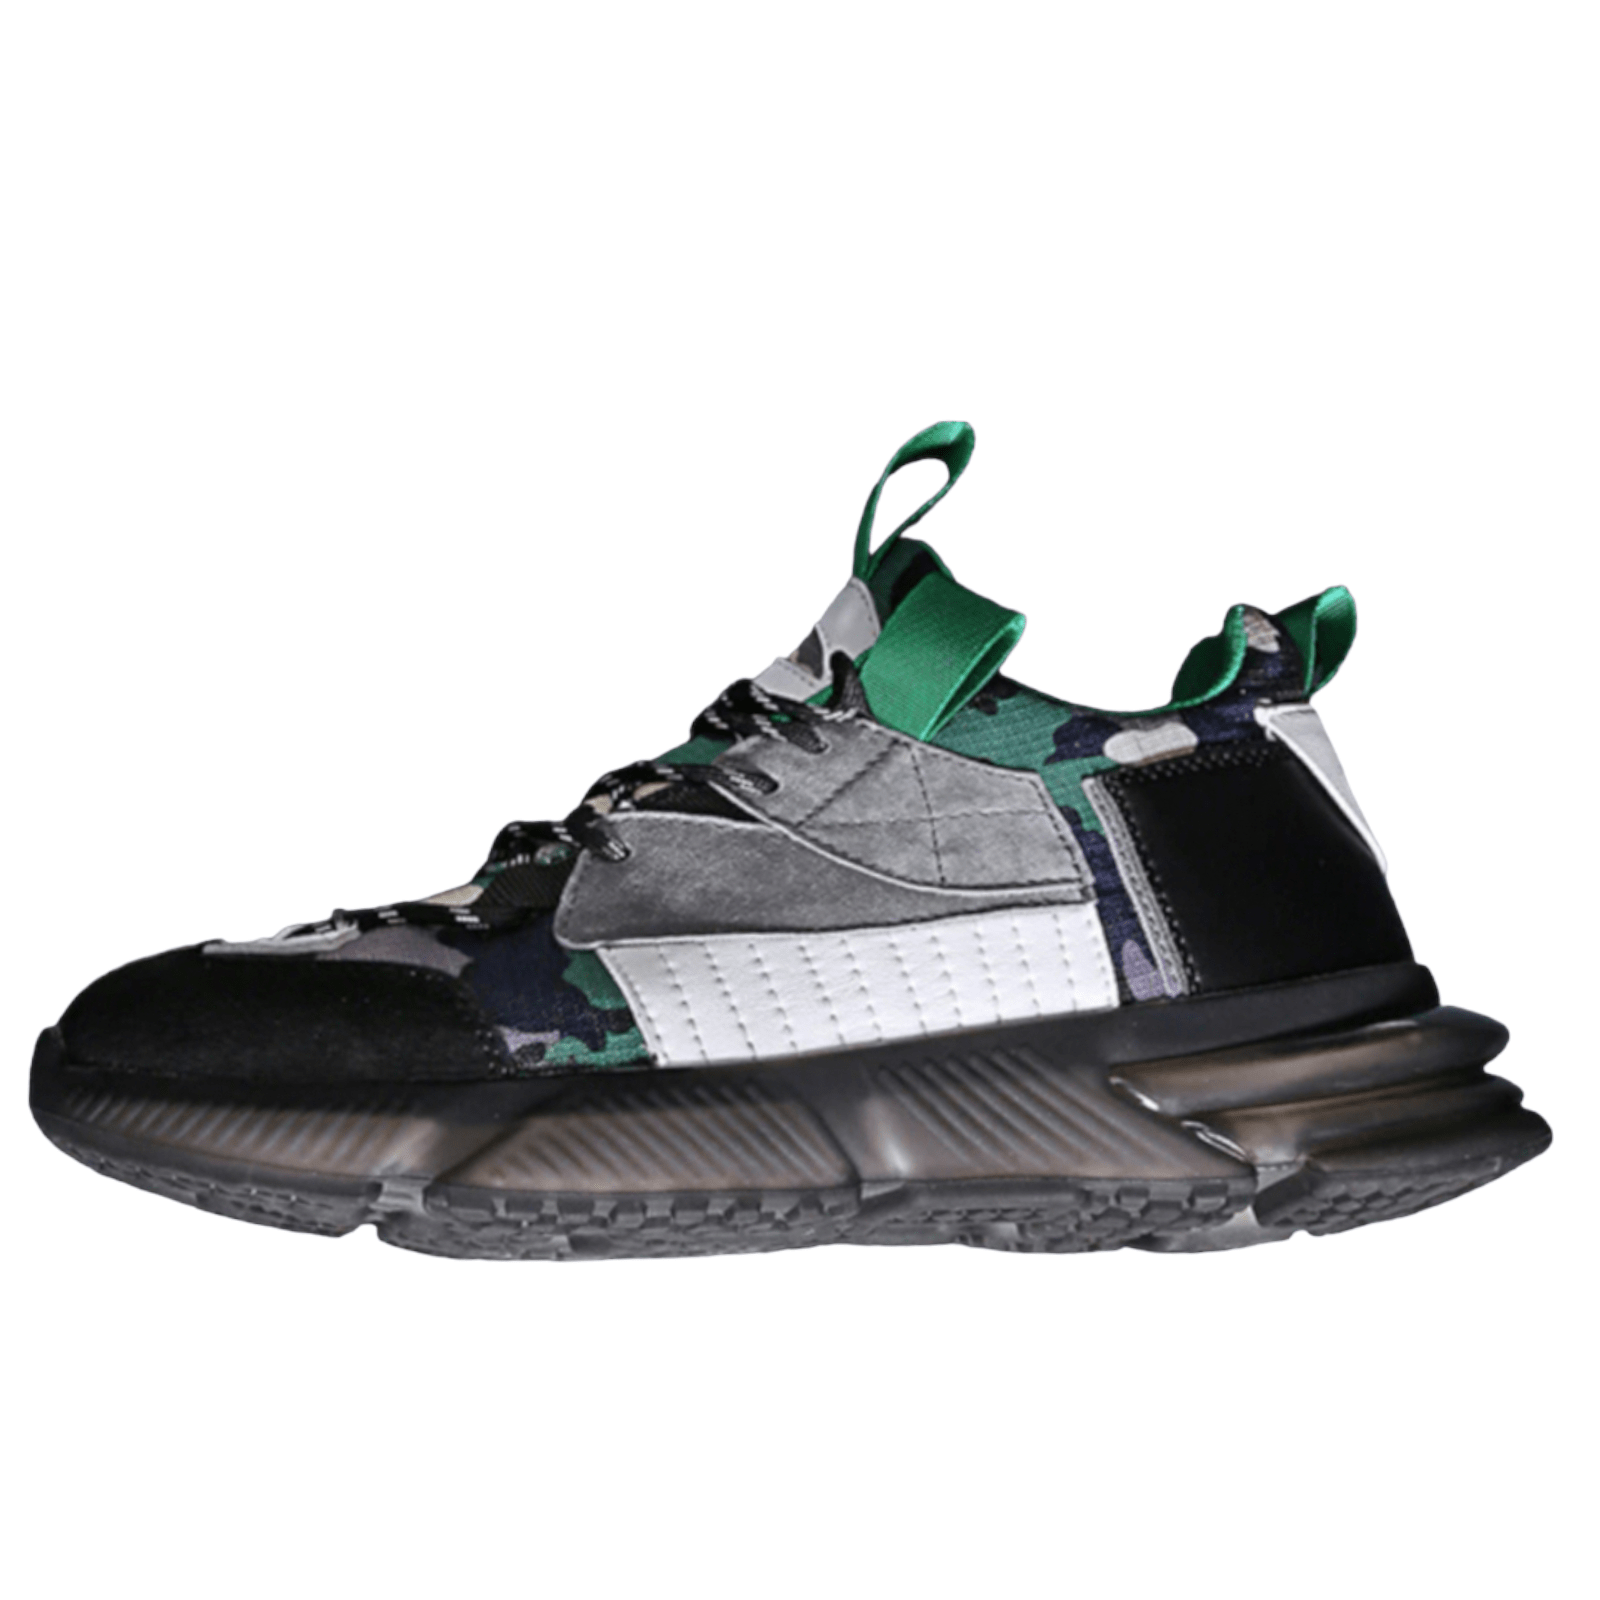 black green sneakers prowl flashlander left side